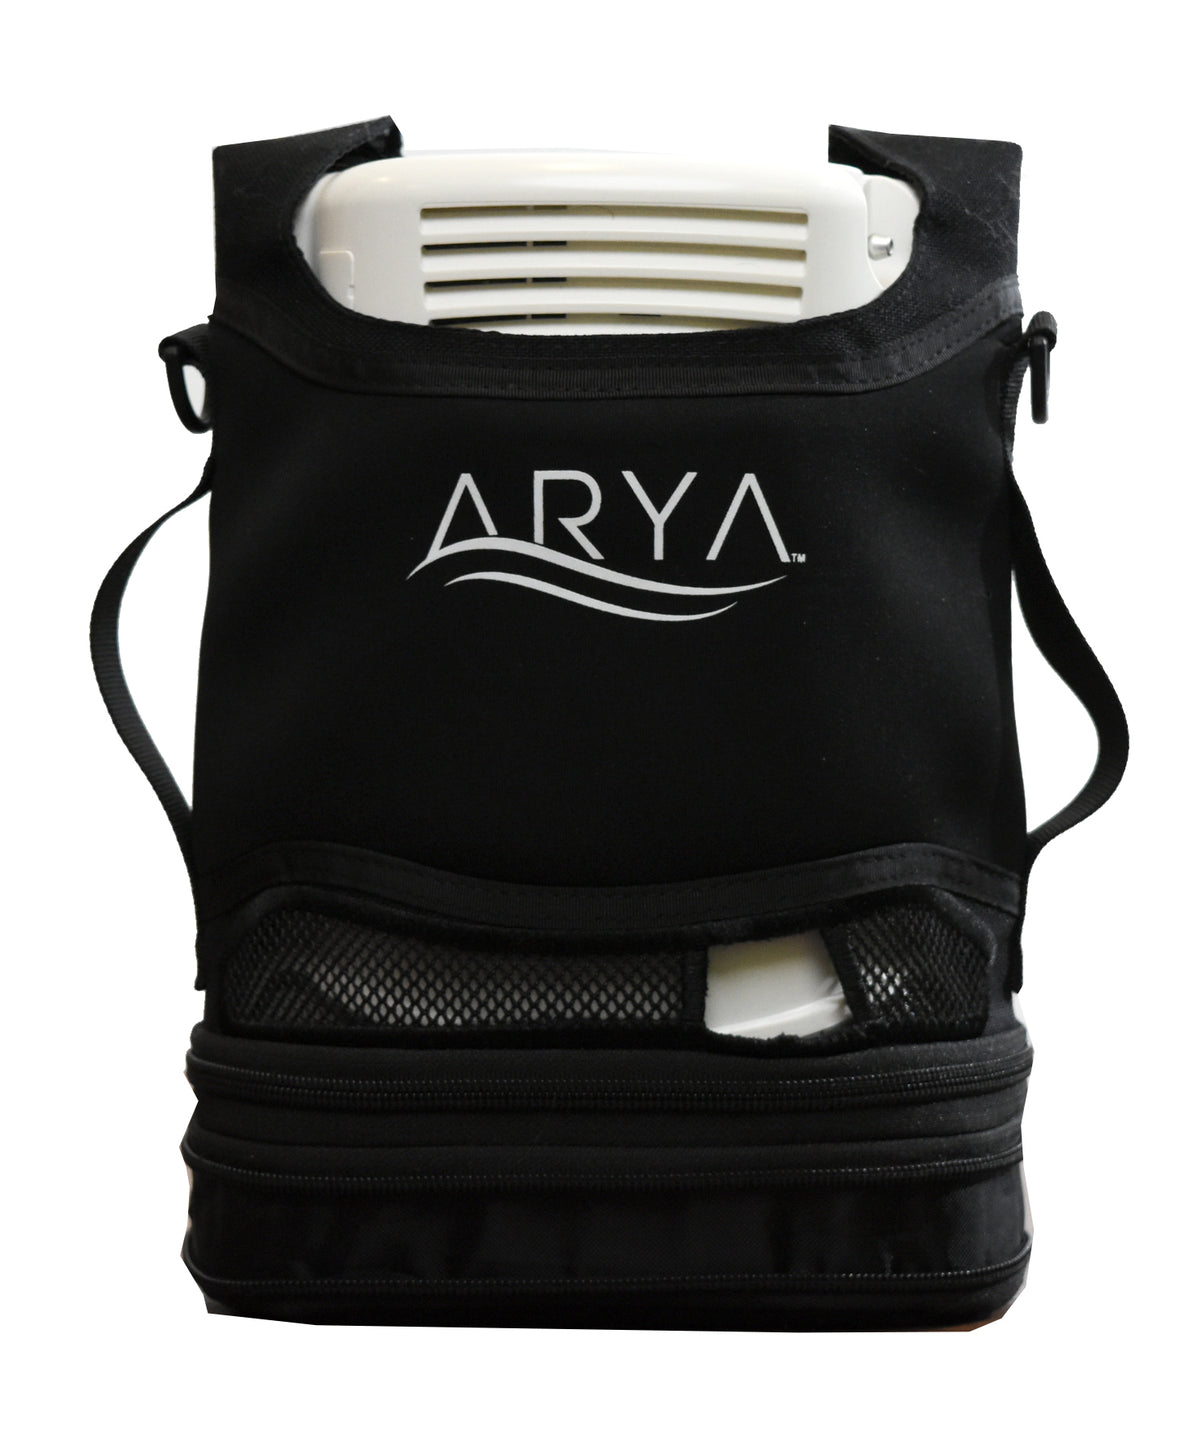 ARYA Go Custom Carrying Bag